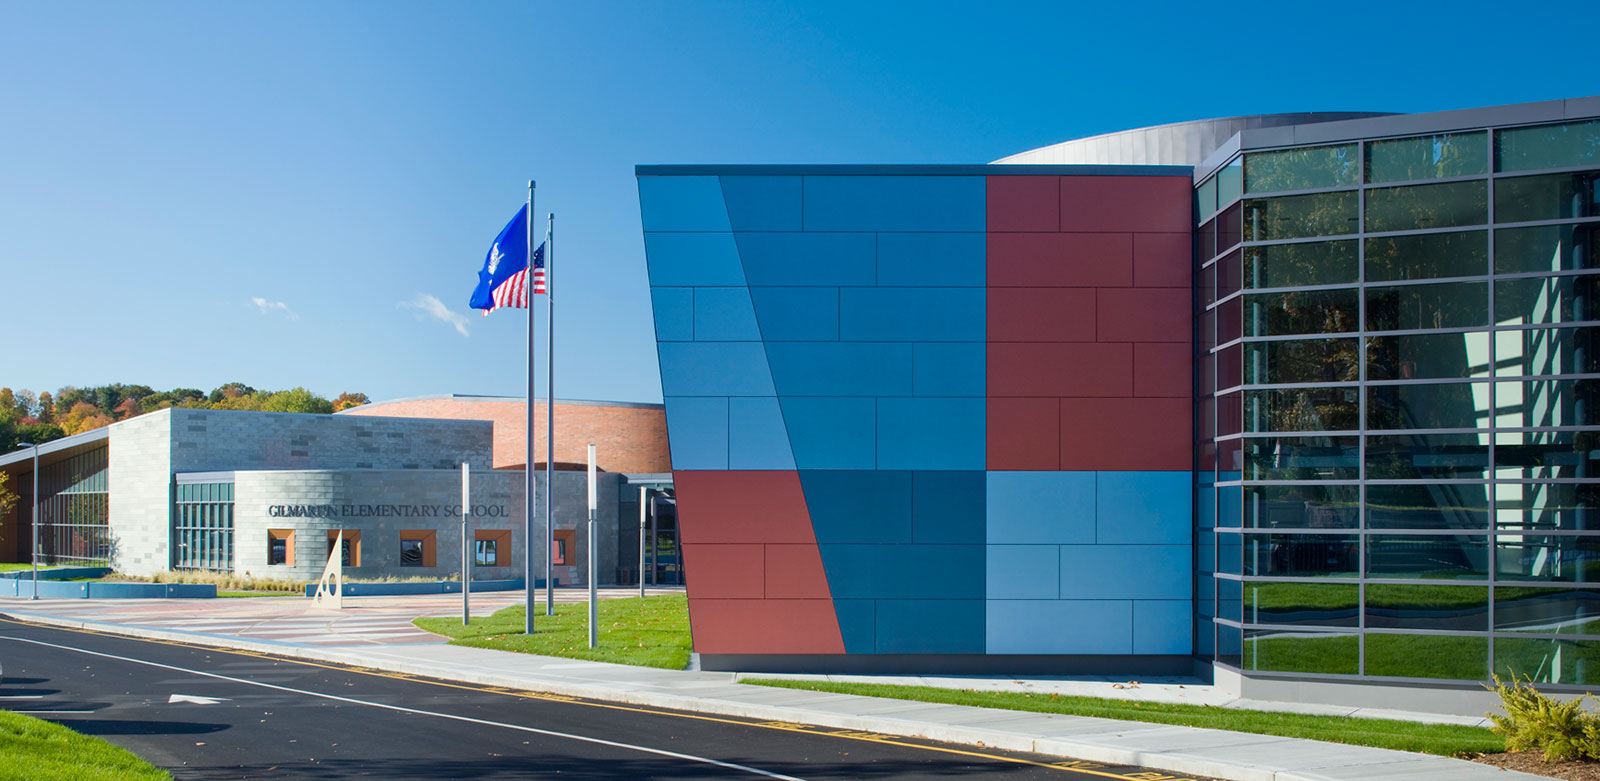 John G. Gilmartin Elementary School – New Public School